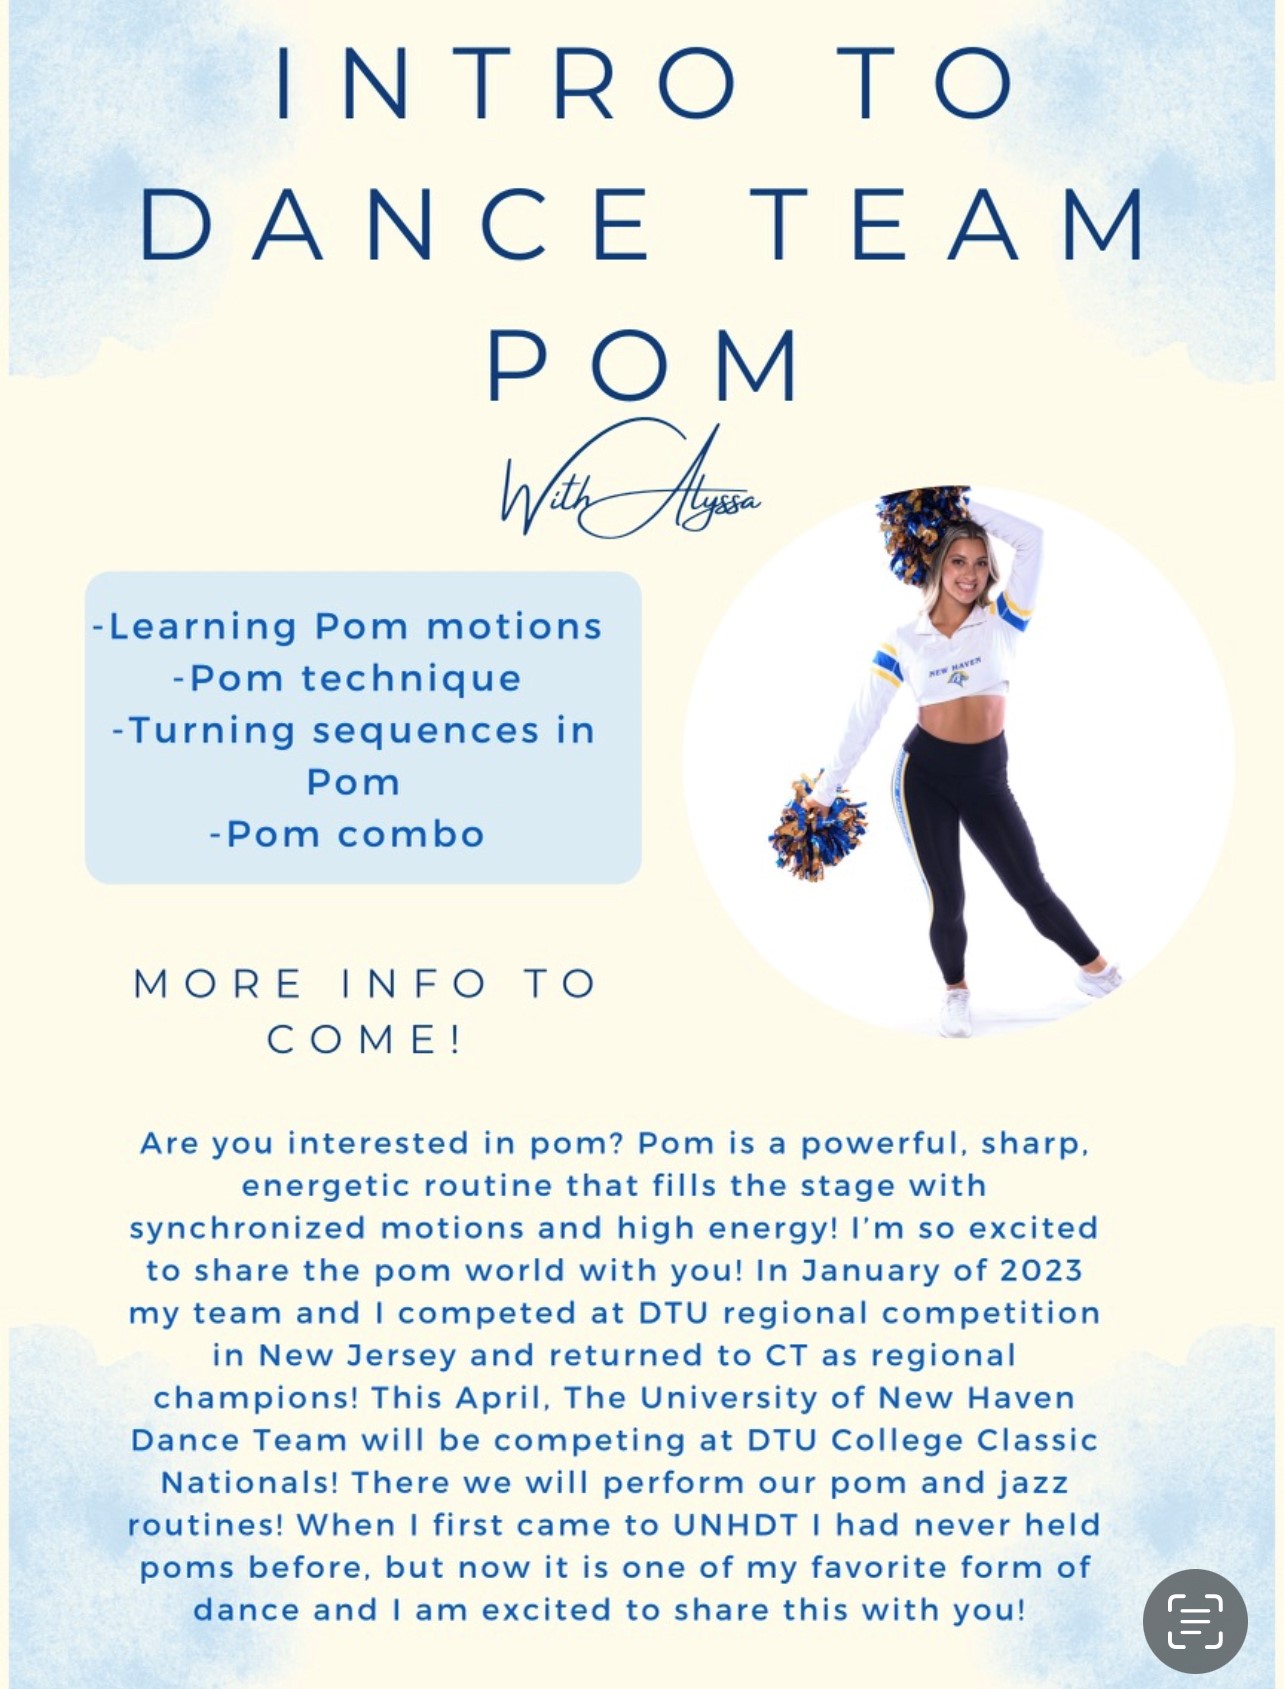 Intro to Dance Team POM